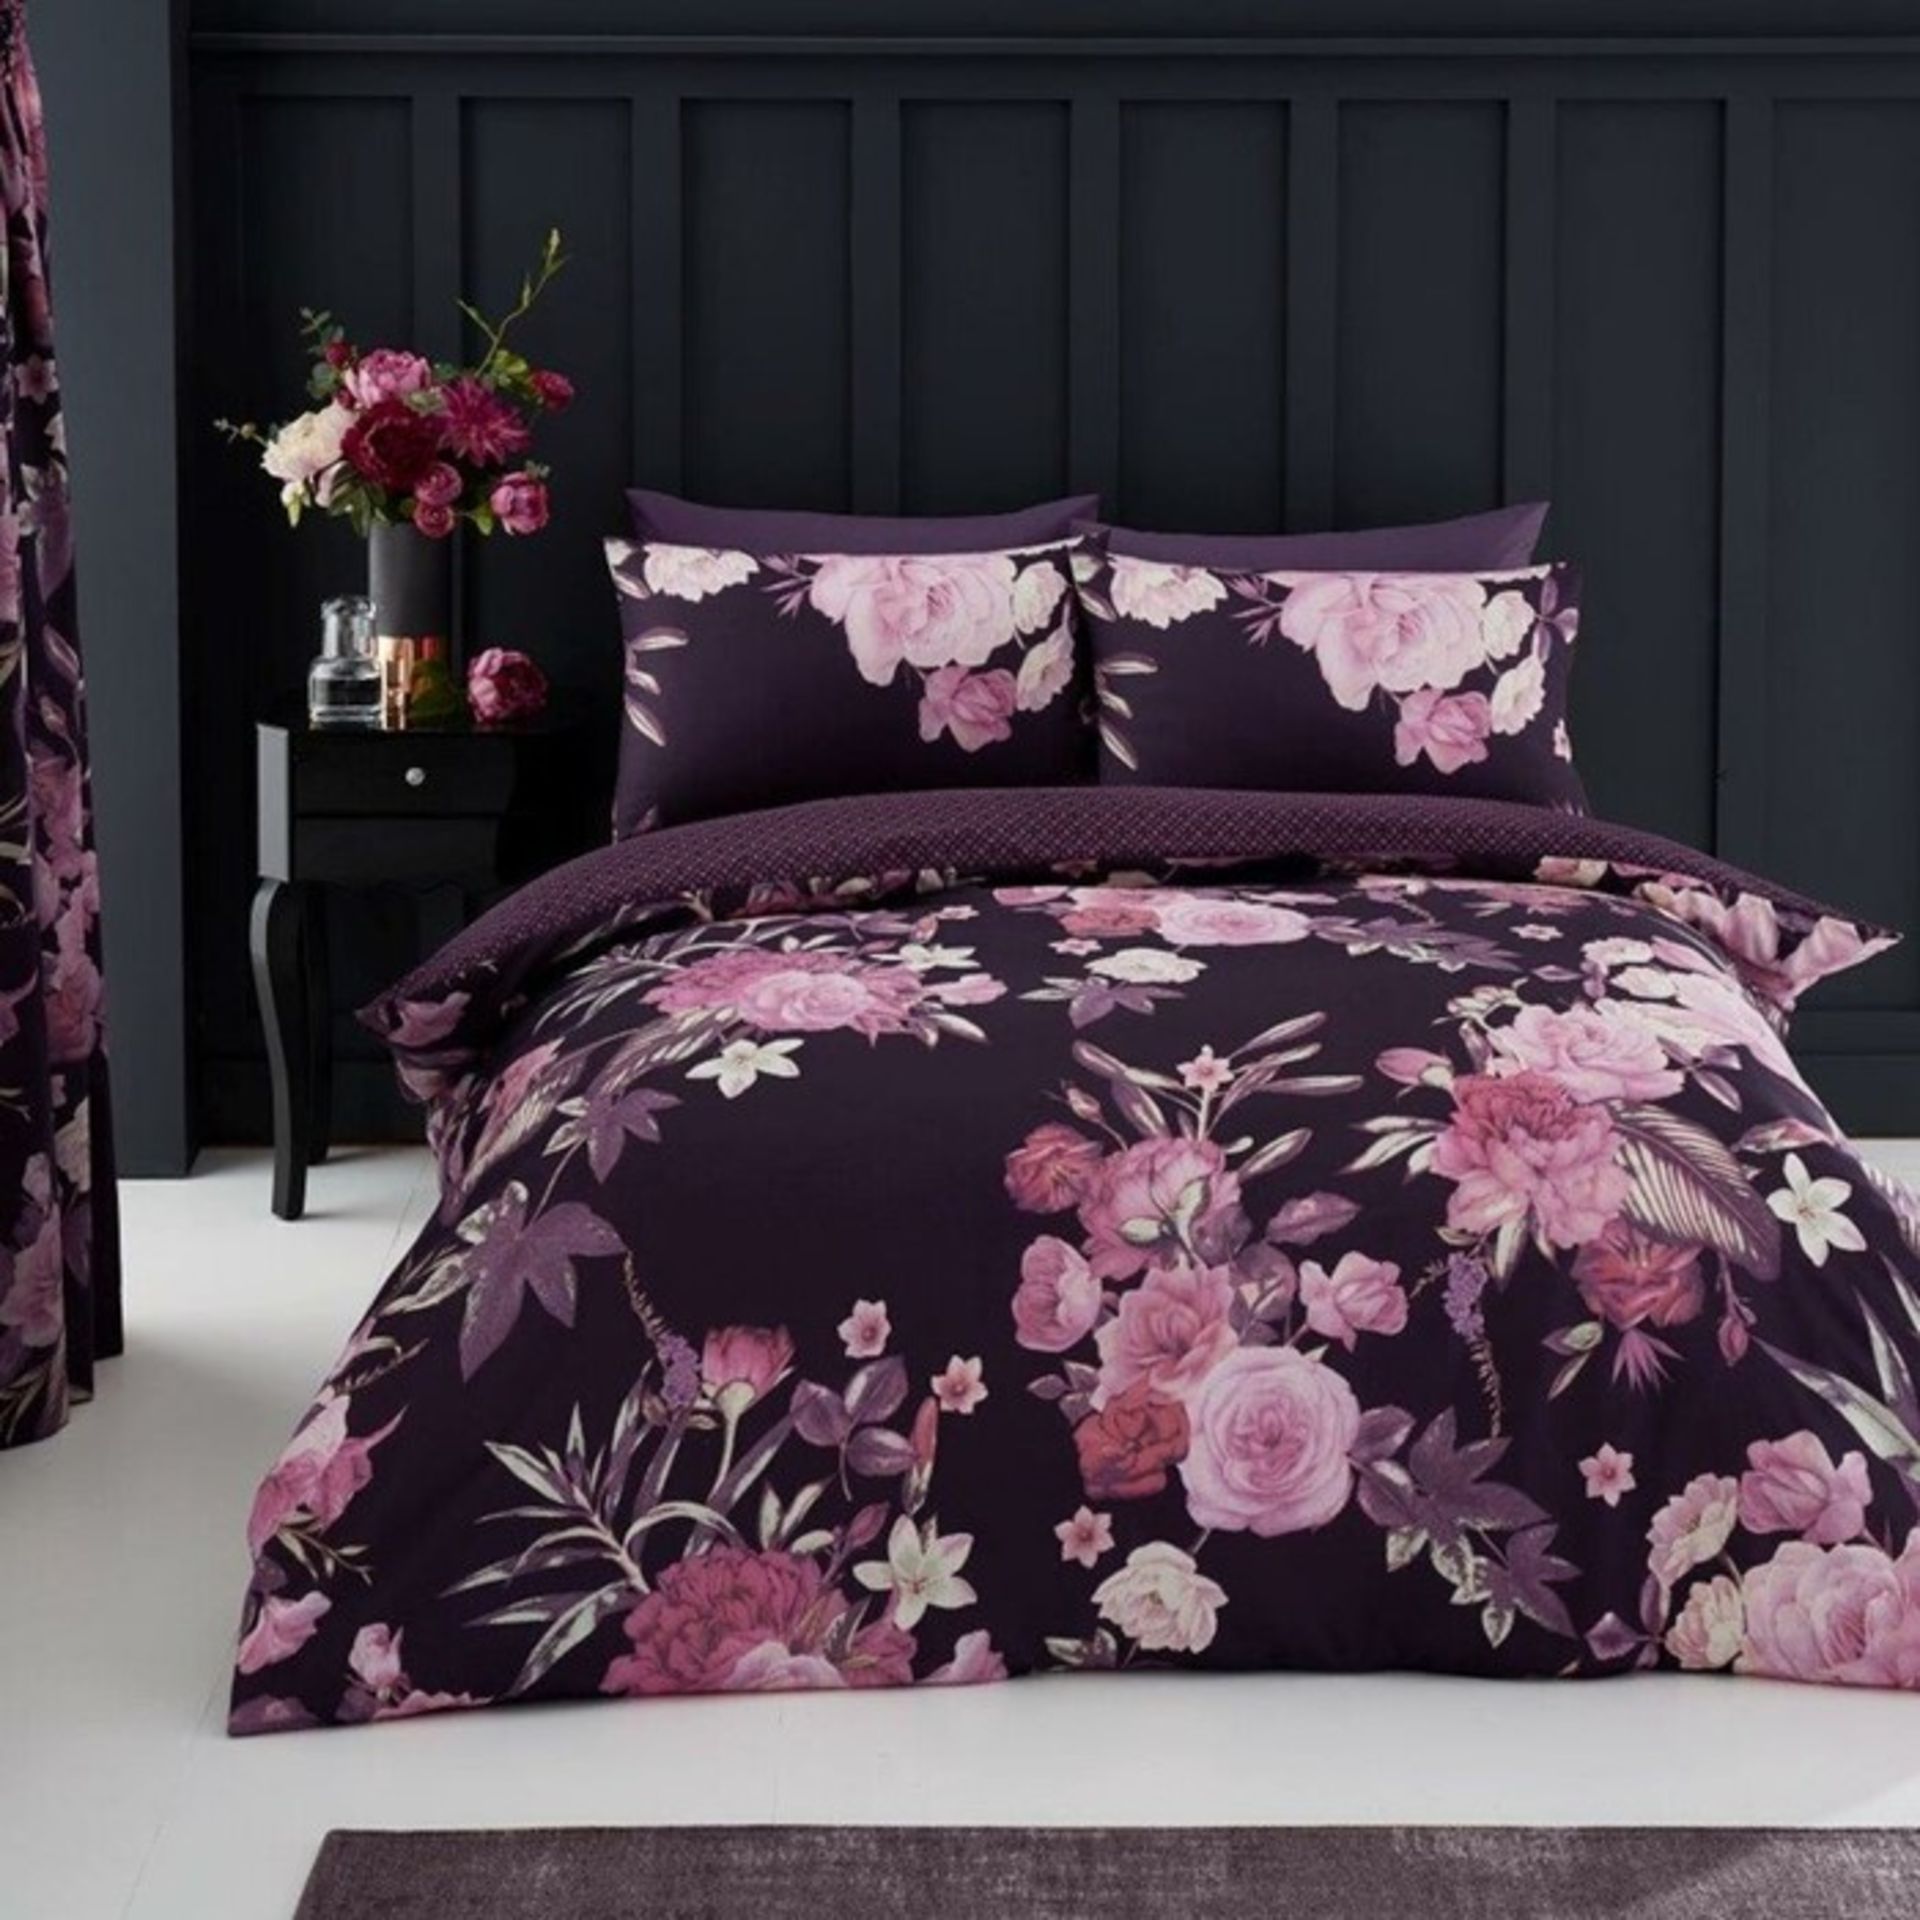 Wayfair Basics, Floral Duvet Cover Set (DOUBLE)(TEAL) - RRP £16.99 (GAVC1693 - 13770/44) 2H